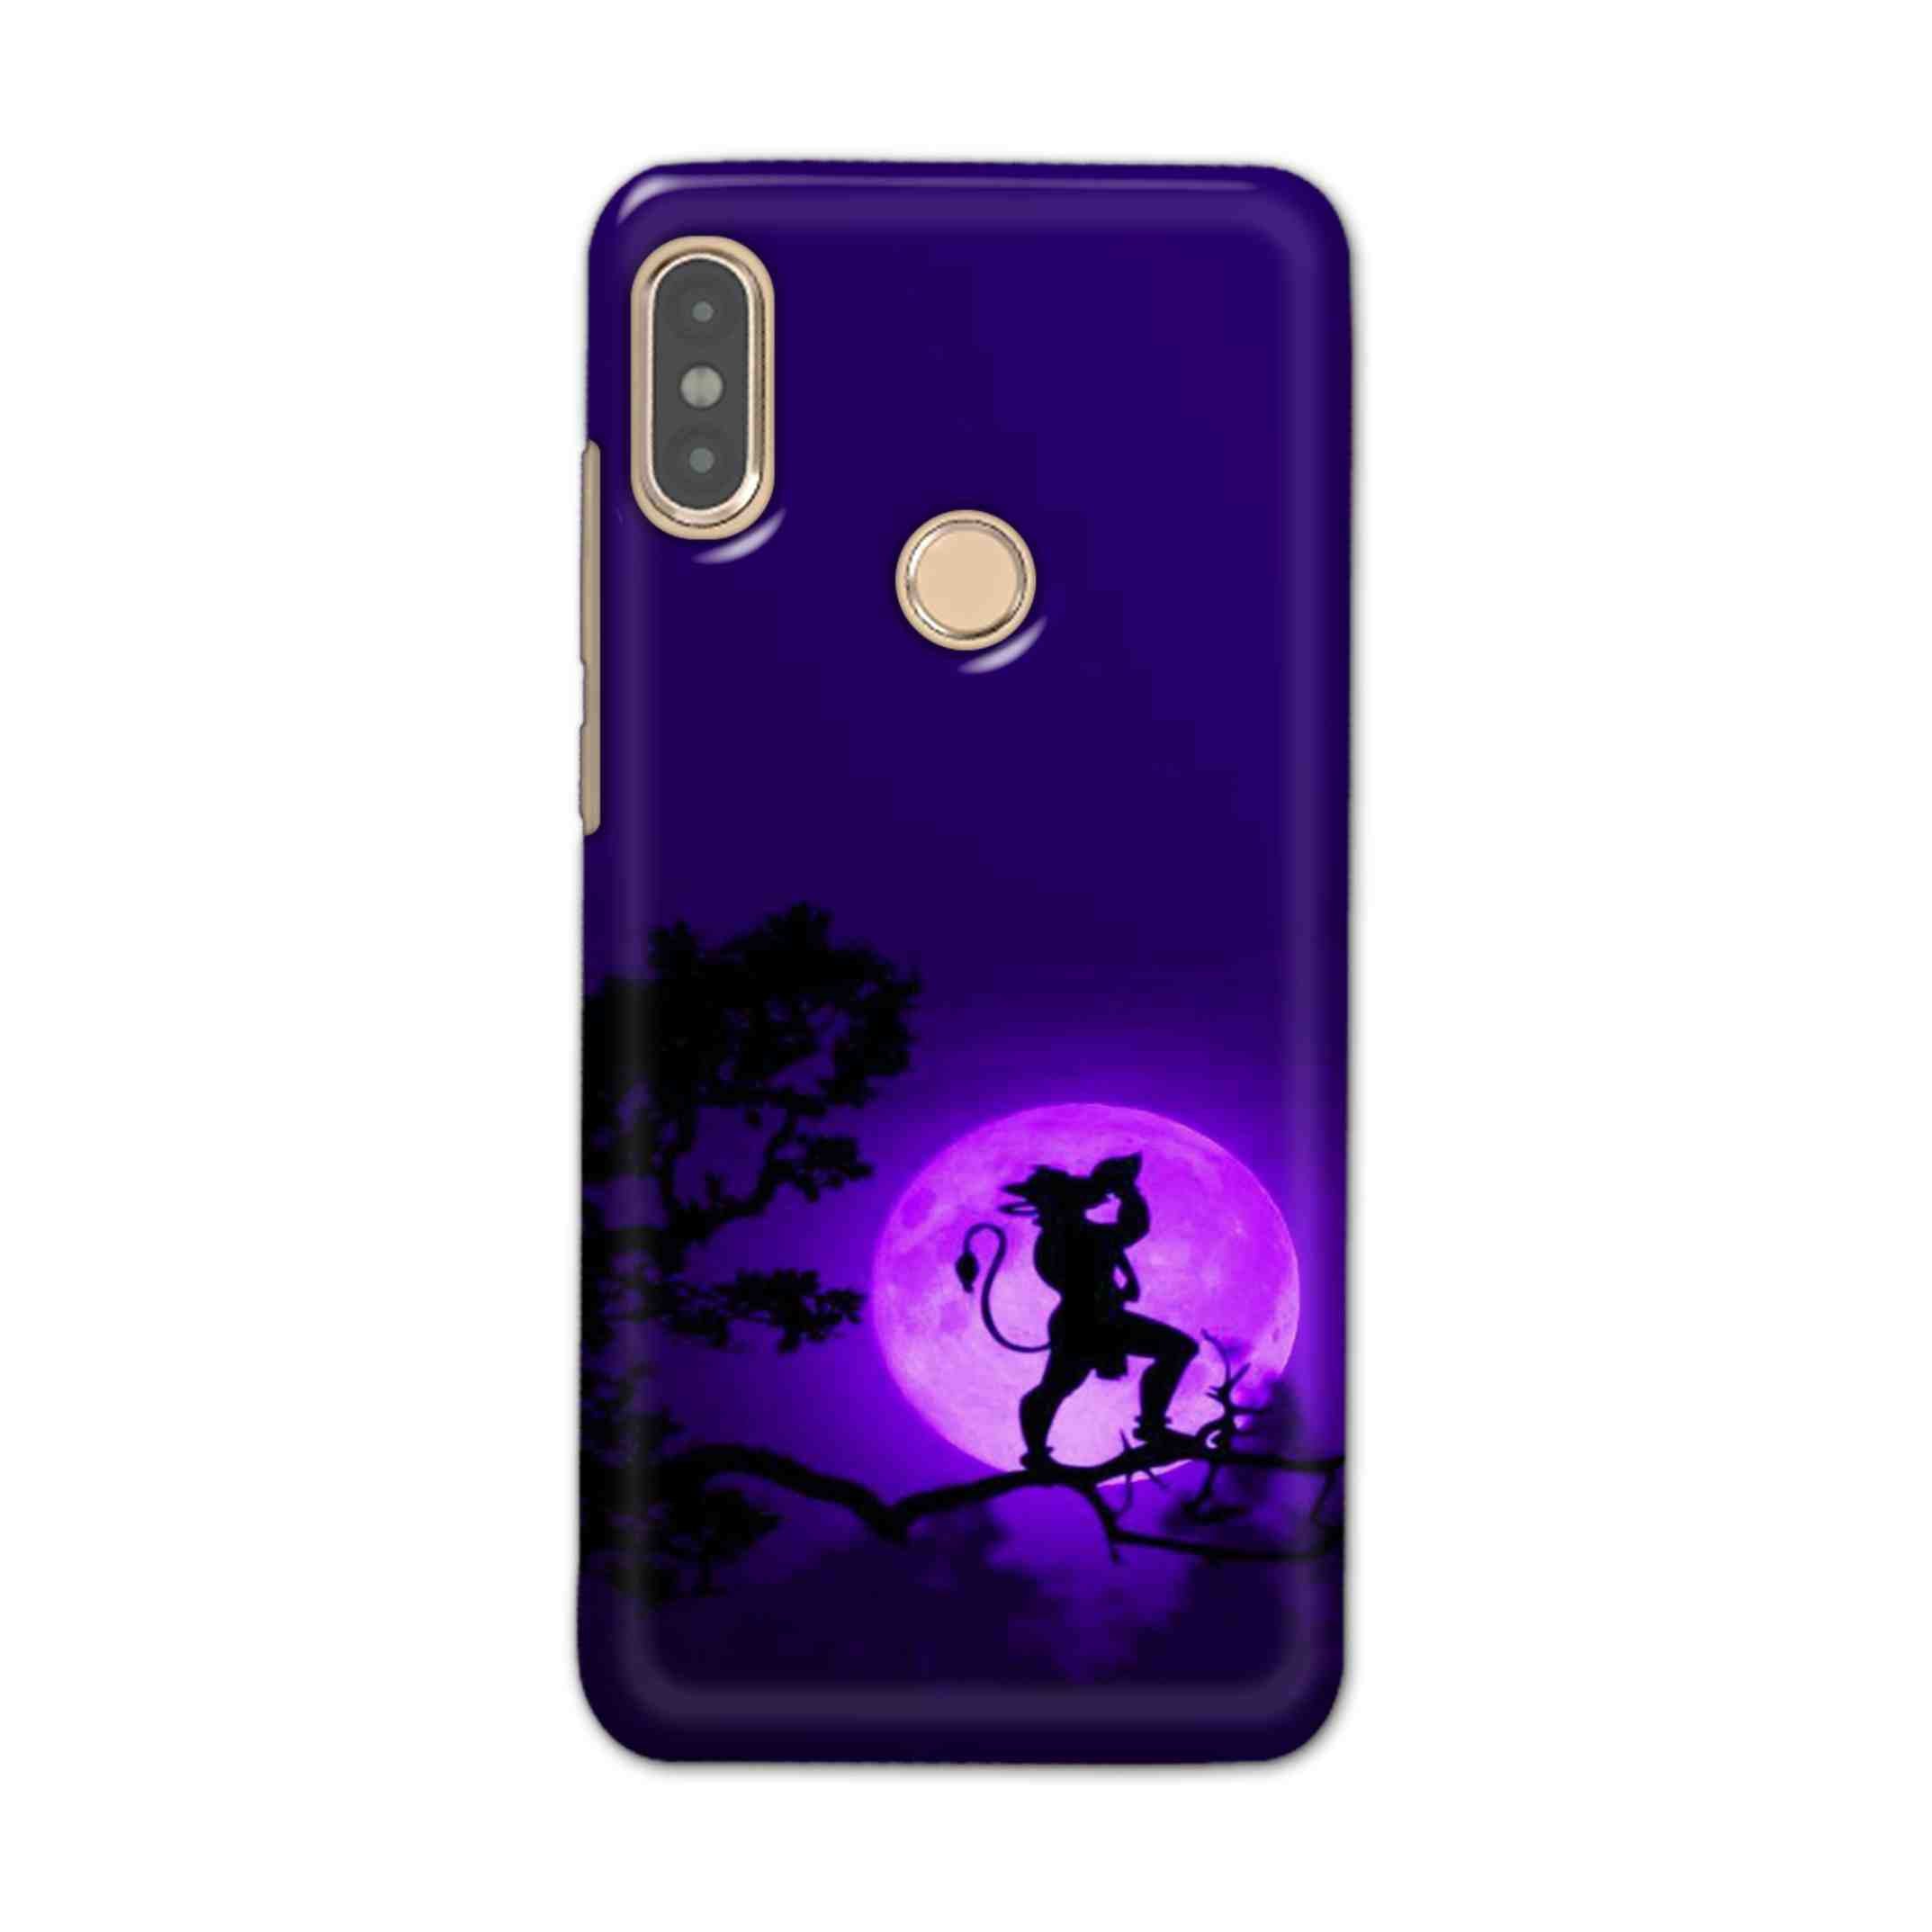 Buy Hanuman Hard Back Mobile Phone Case Cover For Xiaomi Redmi Note 5 Pro Online